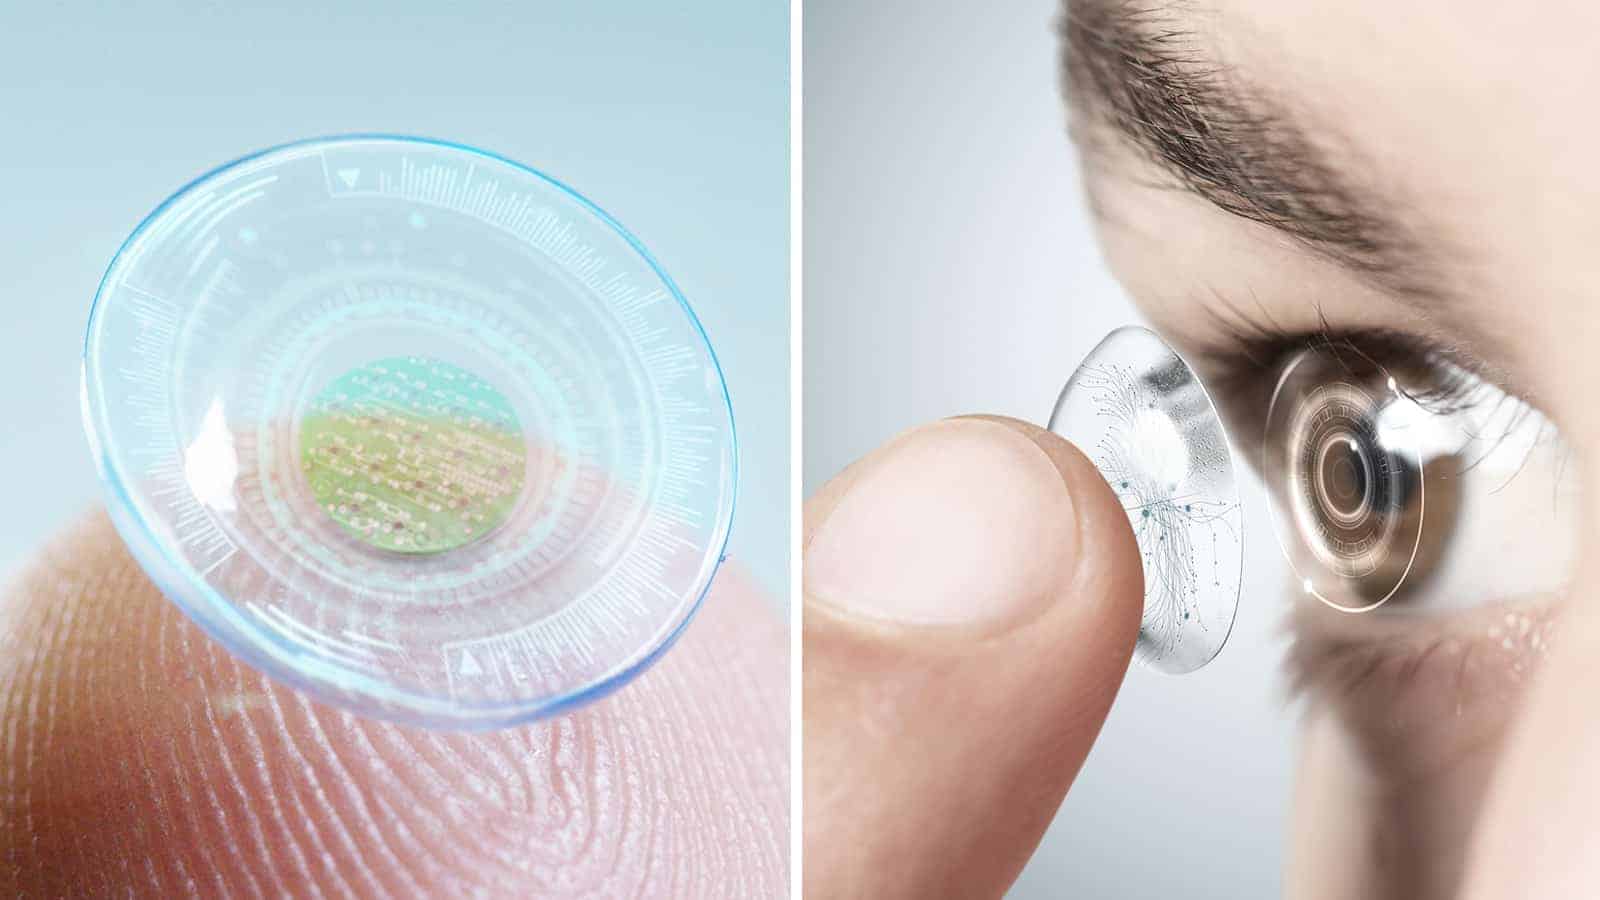 Scientists Develop Contact Lenses That Can Treat Diabetes